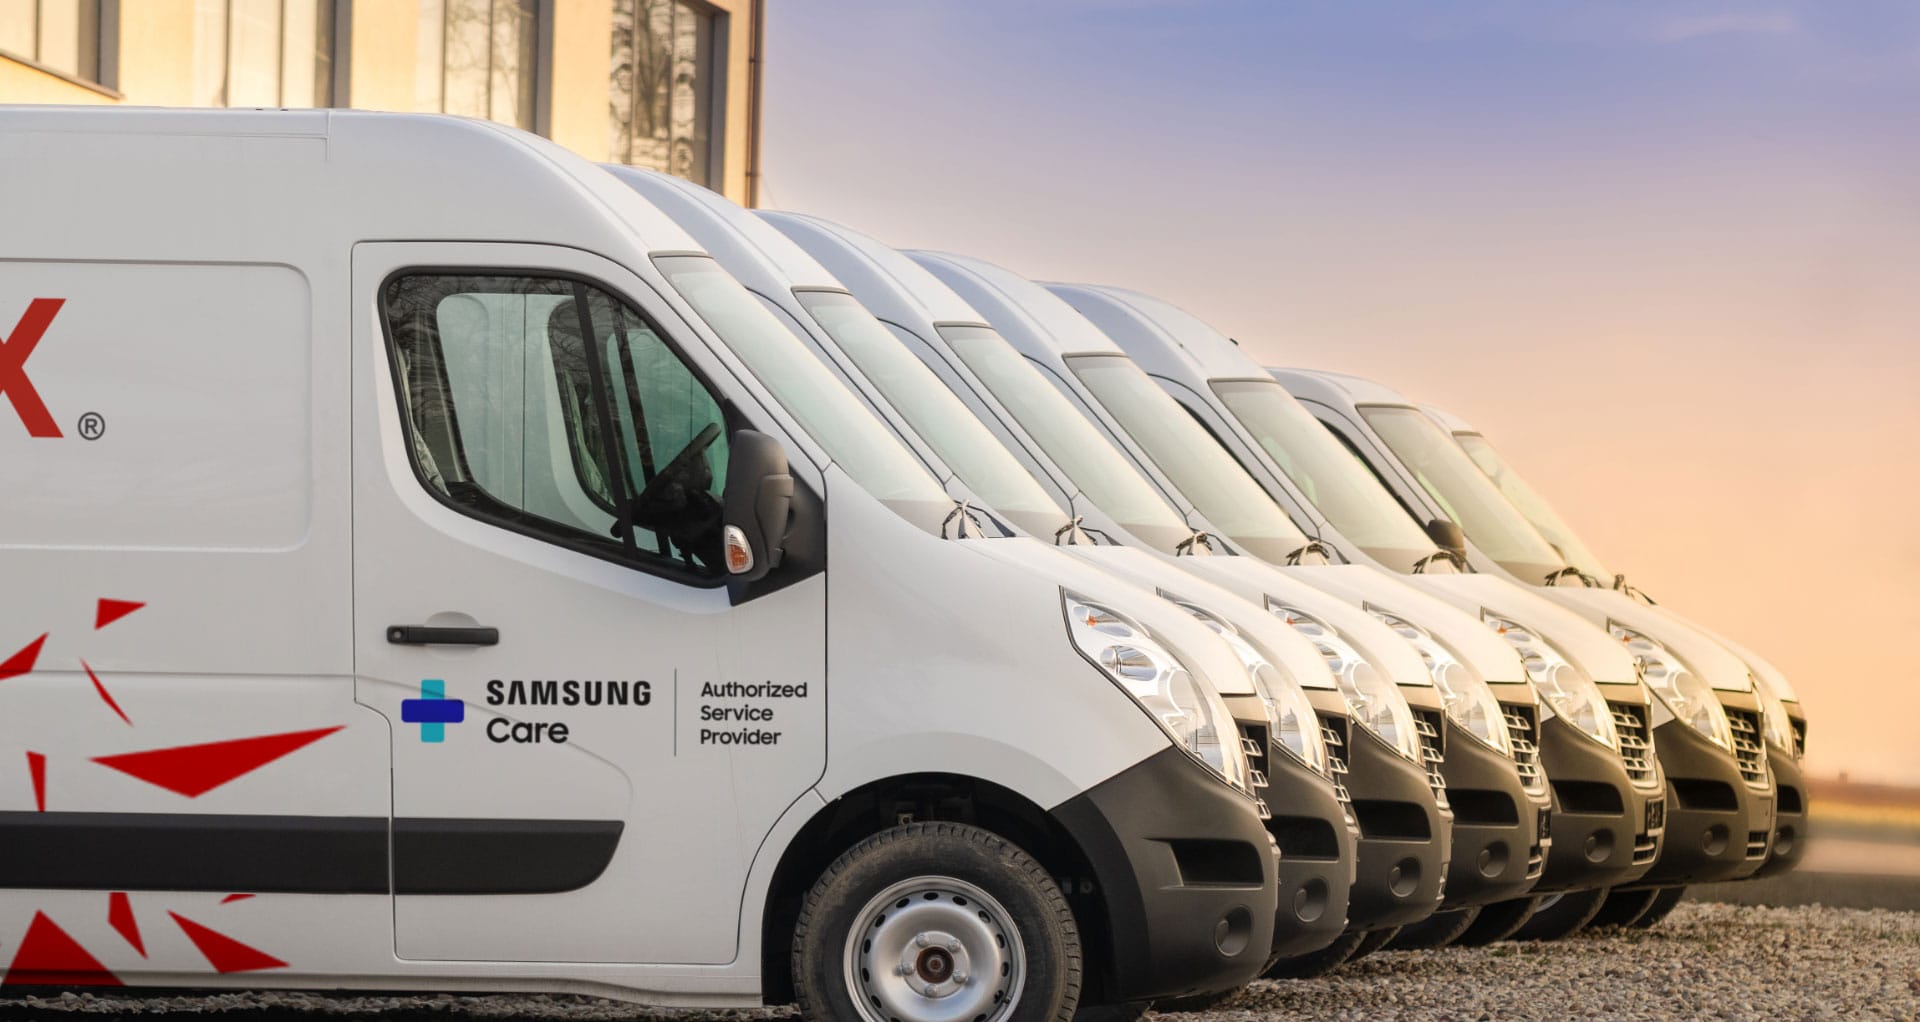 uBreakiFix Samsung Care+ Authorized Service Partner Repair Vans